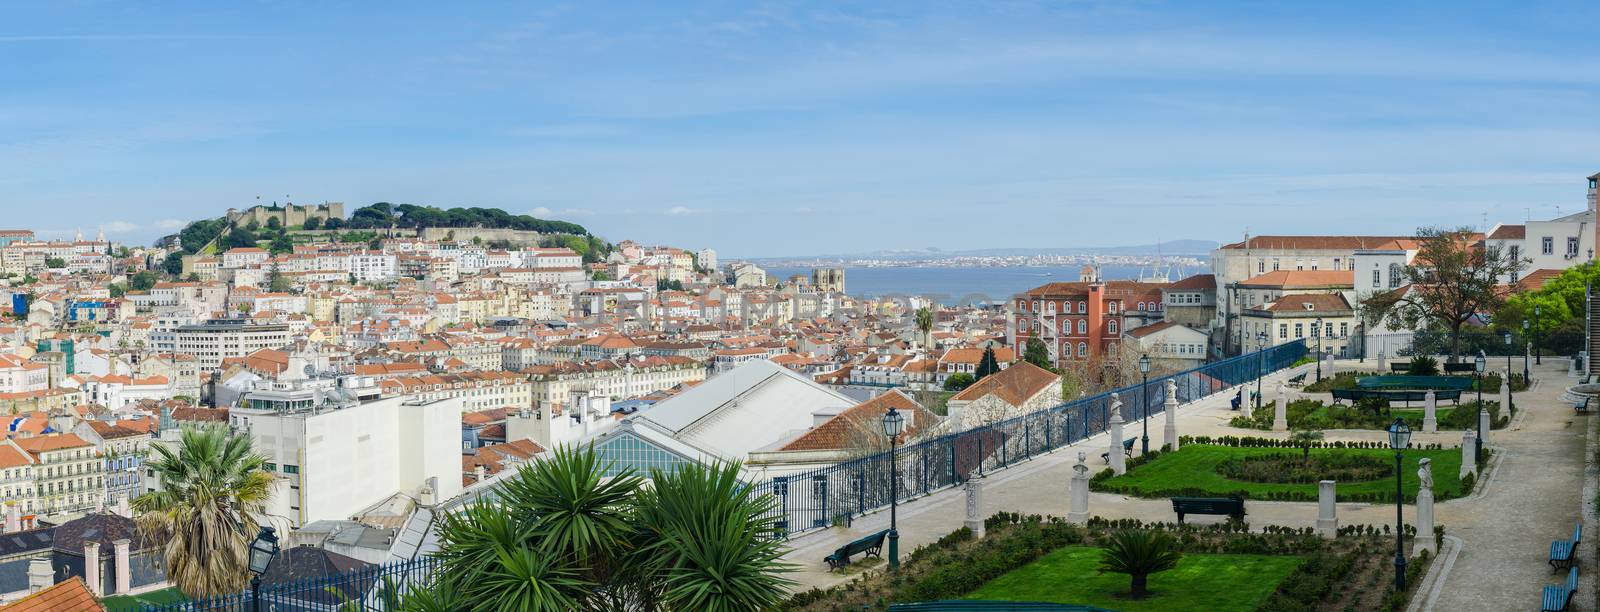 Panorama of Lisbon by homydesign